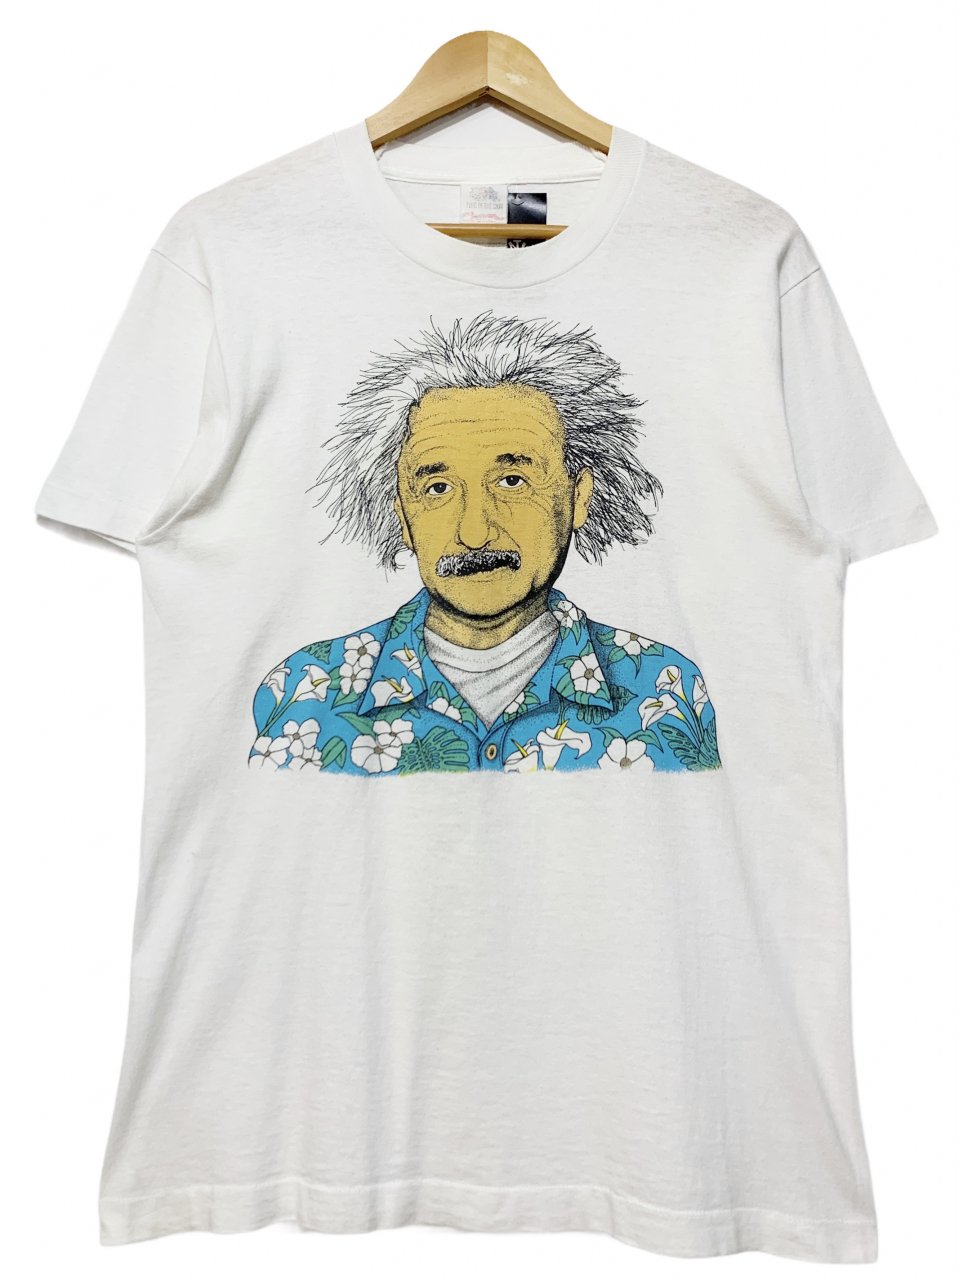 USA製 80s Albert Einstein Print S/S Tee 白 M アインシュタイン 半袖 Tシャツ プリント アロハシャツ 偉人T  フルーツオブザルーム - NEWJOKE ONLINE STORE